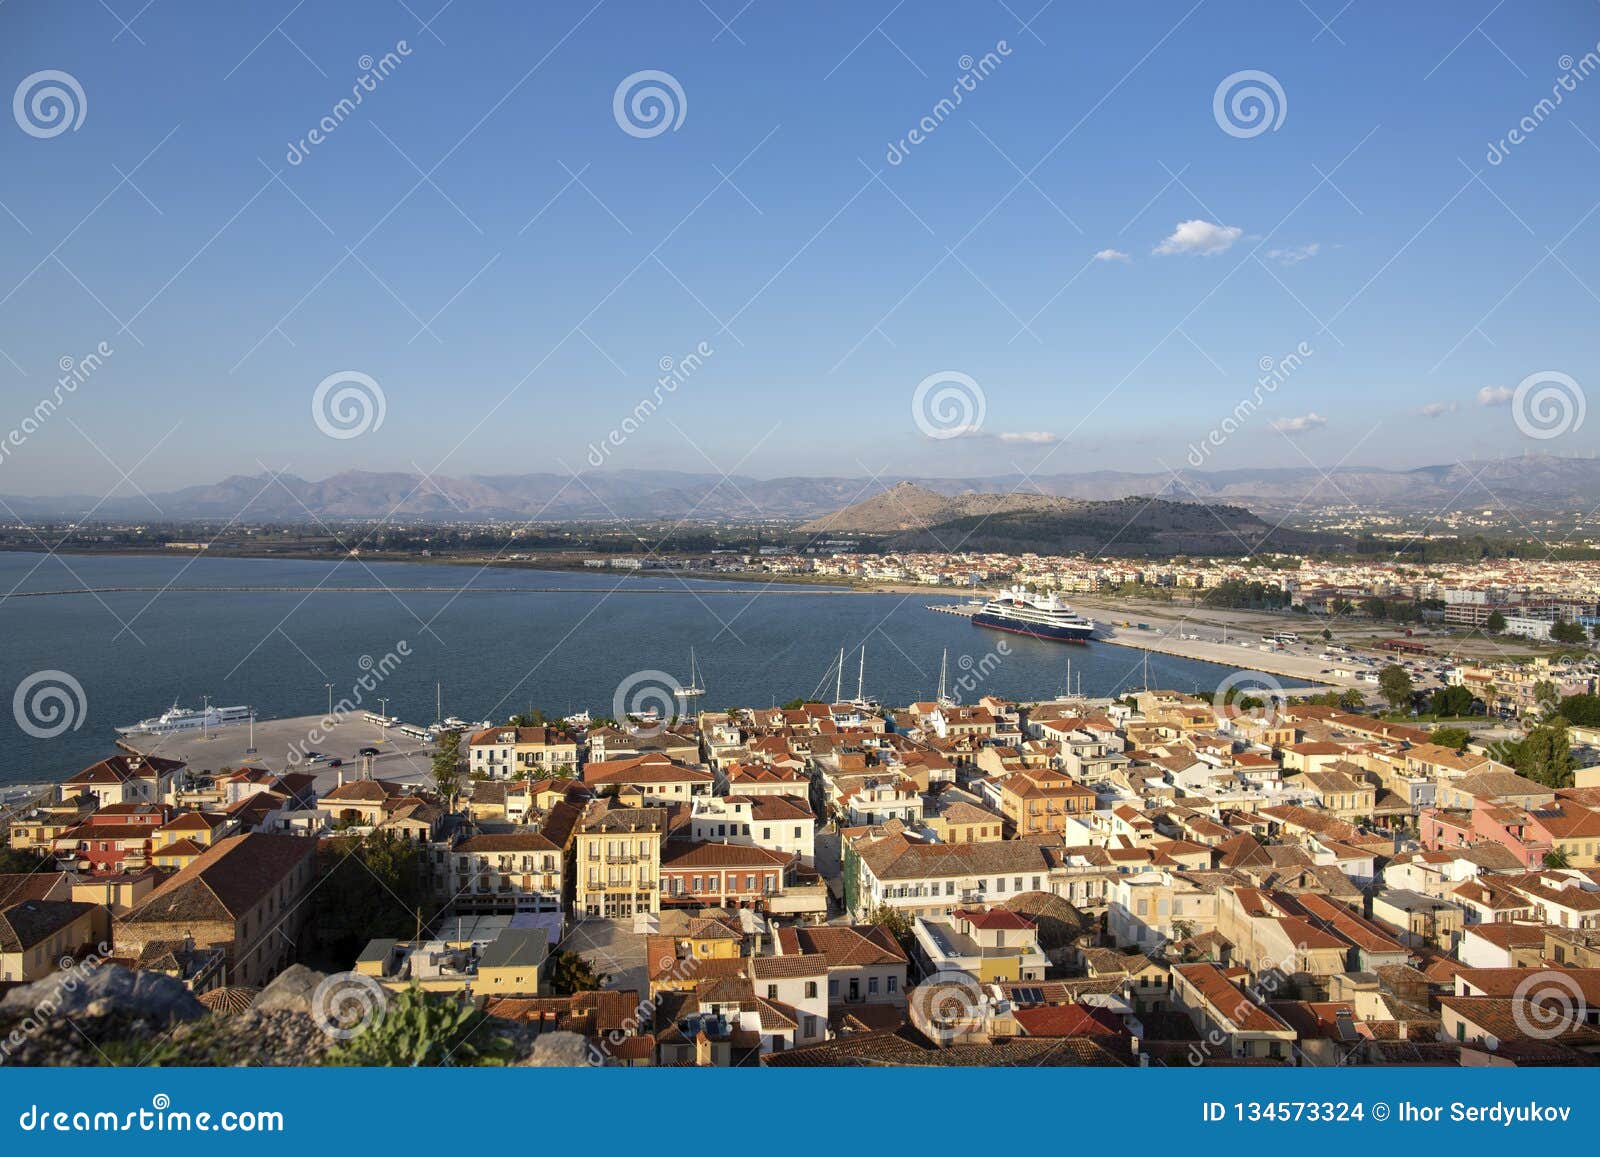 nafplion panoramic view. aerial view on the bay and on the city nafplion nauplia, nafplio, greece - immagine